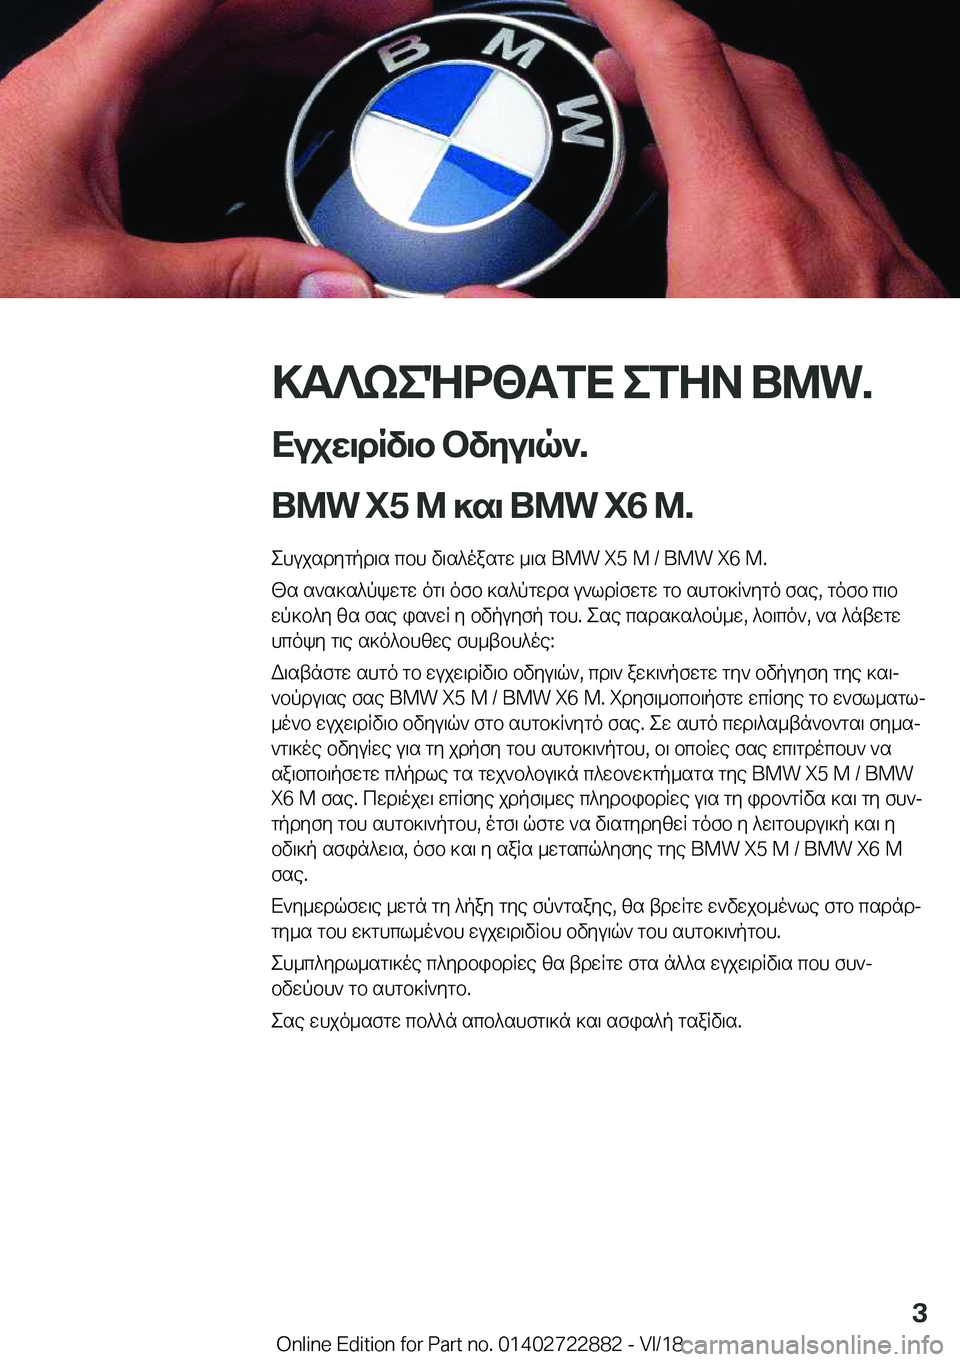 BMW X6 M 2019  ΟΔΗΓΌΣ ΧΡΉΣΗΣ (in Greek) >T?keNd<TfX�efZA��B�M�W�.
Xujw\dRv\b�bvyu\q`�.
�B�M�W��X�5��M�]s\��B�M�W��X�6��M�. ehujsdygpd\s�cbh�v\s^oasgw�_\s��B�M�W�i�